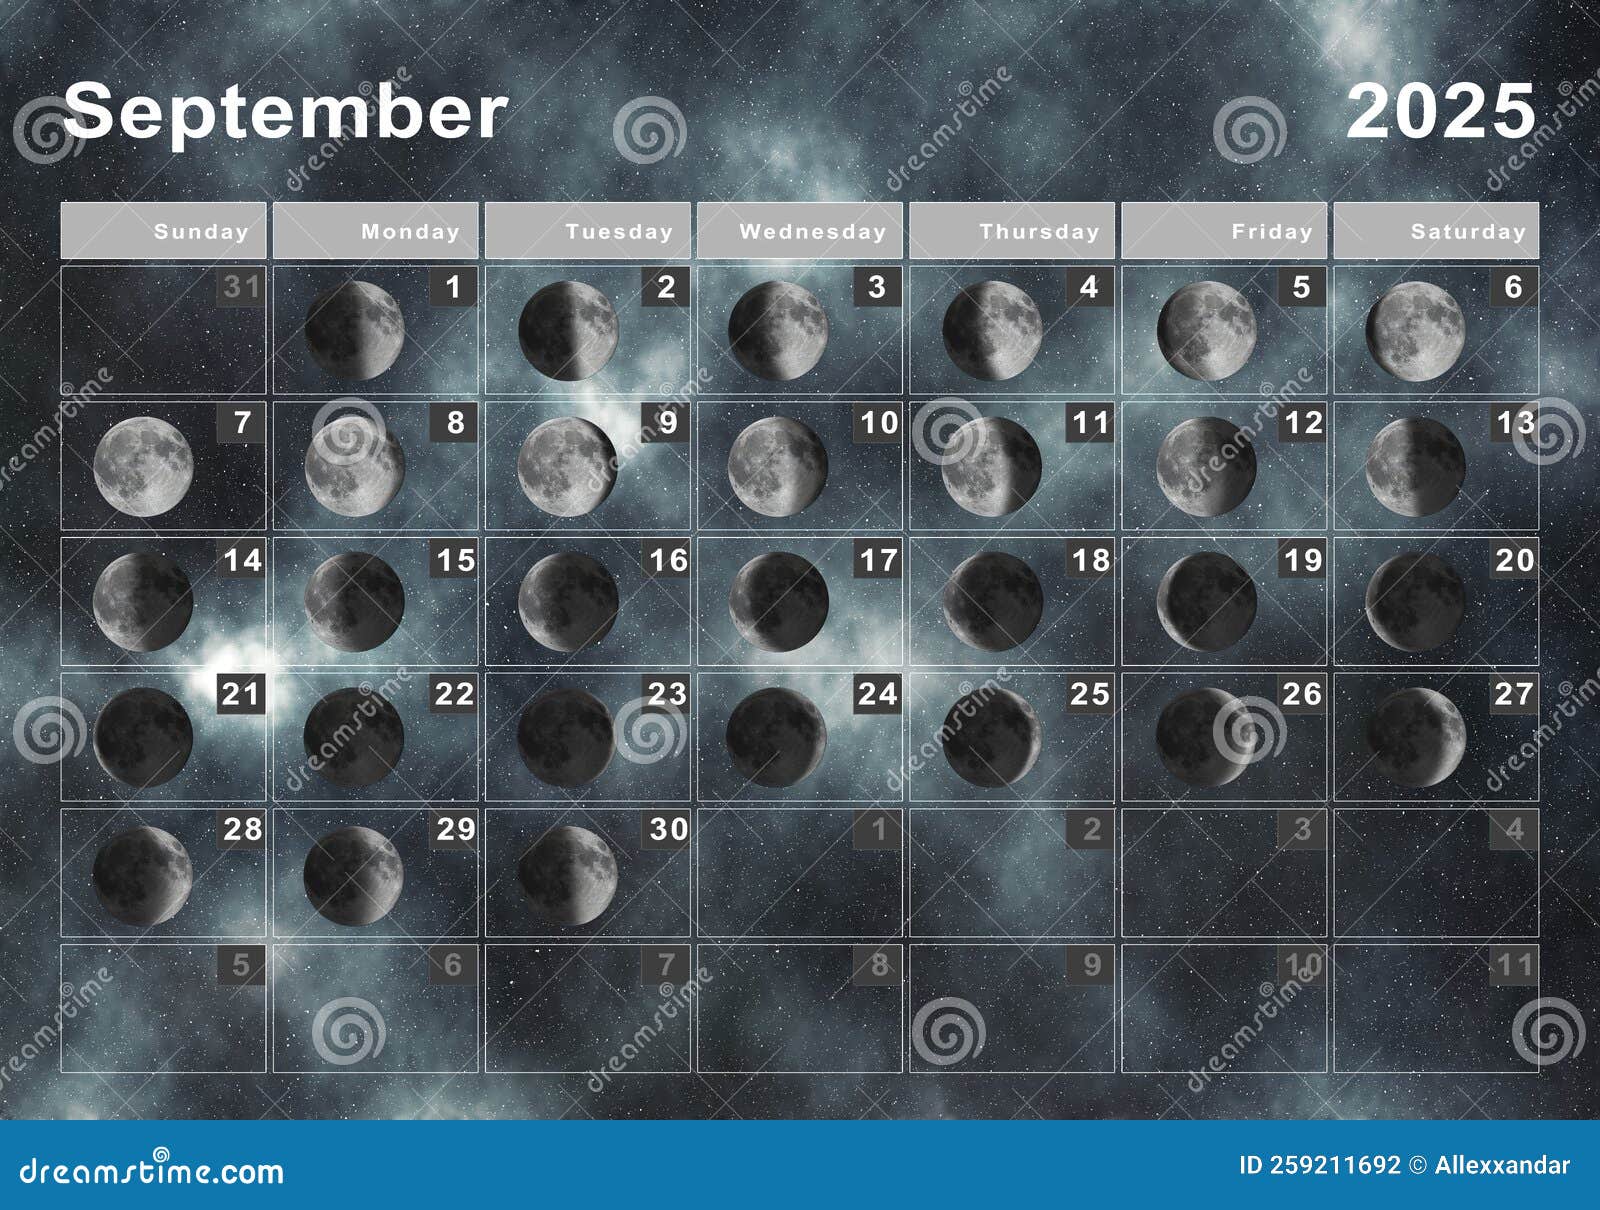 september-2025-lunar-calendar-moon-cycles-stock-illustration-illustration-of-galaxy-moon